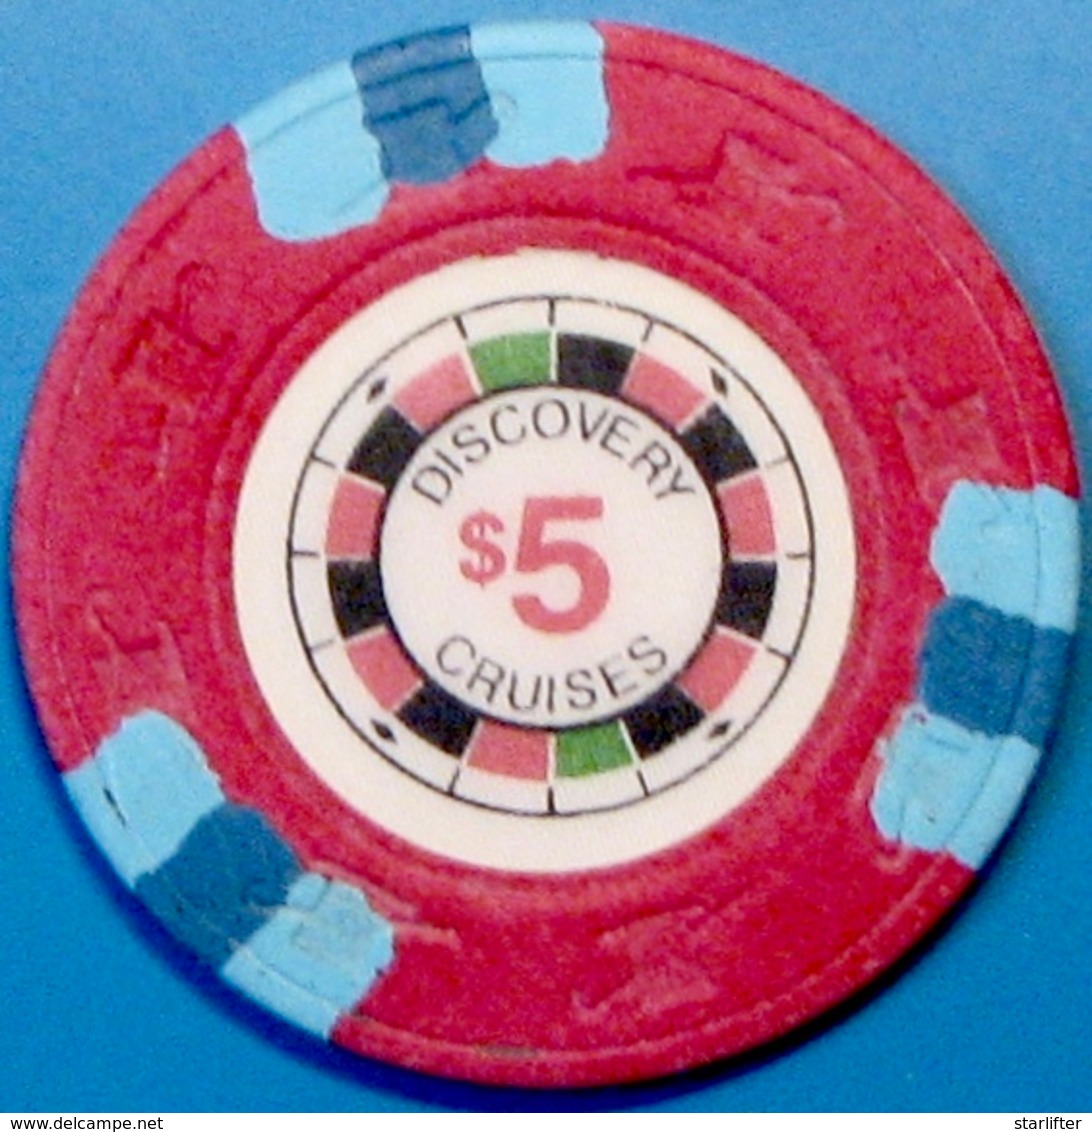 $5 Casino Chip. Discovery Cruise Line. E76. - Casino